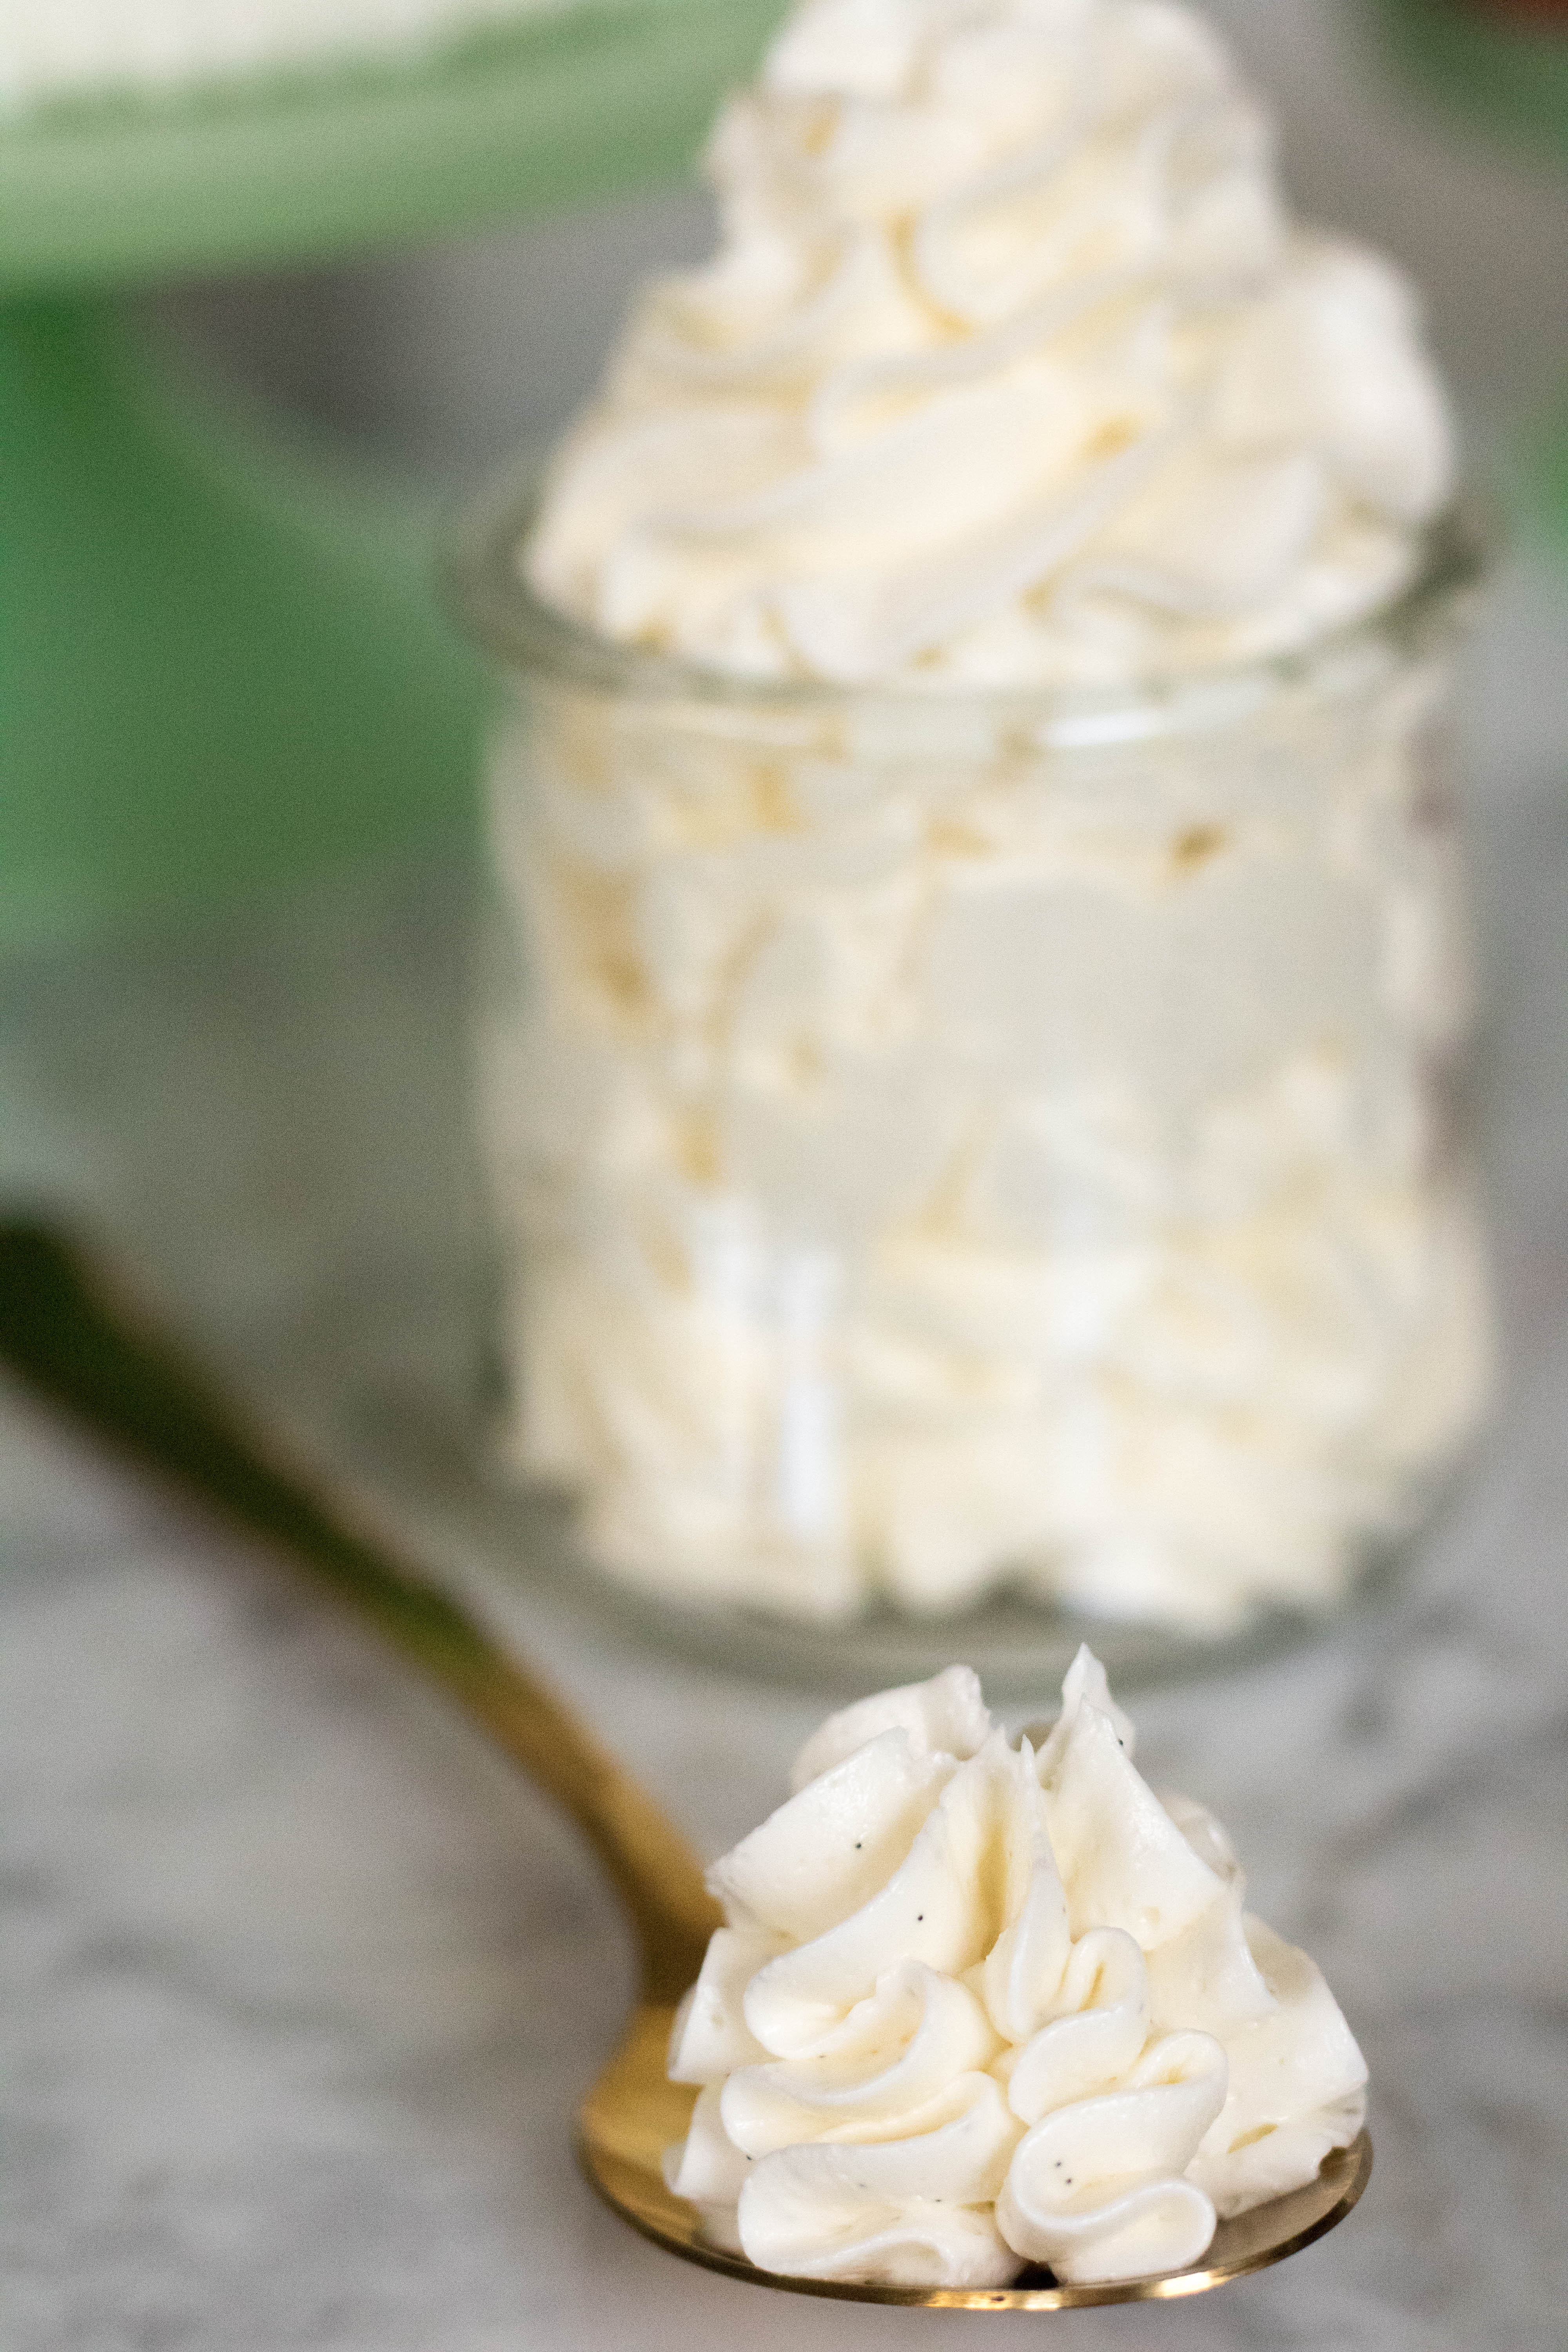 Italian meringue buttercream with vanilla beans